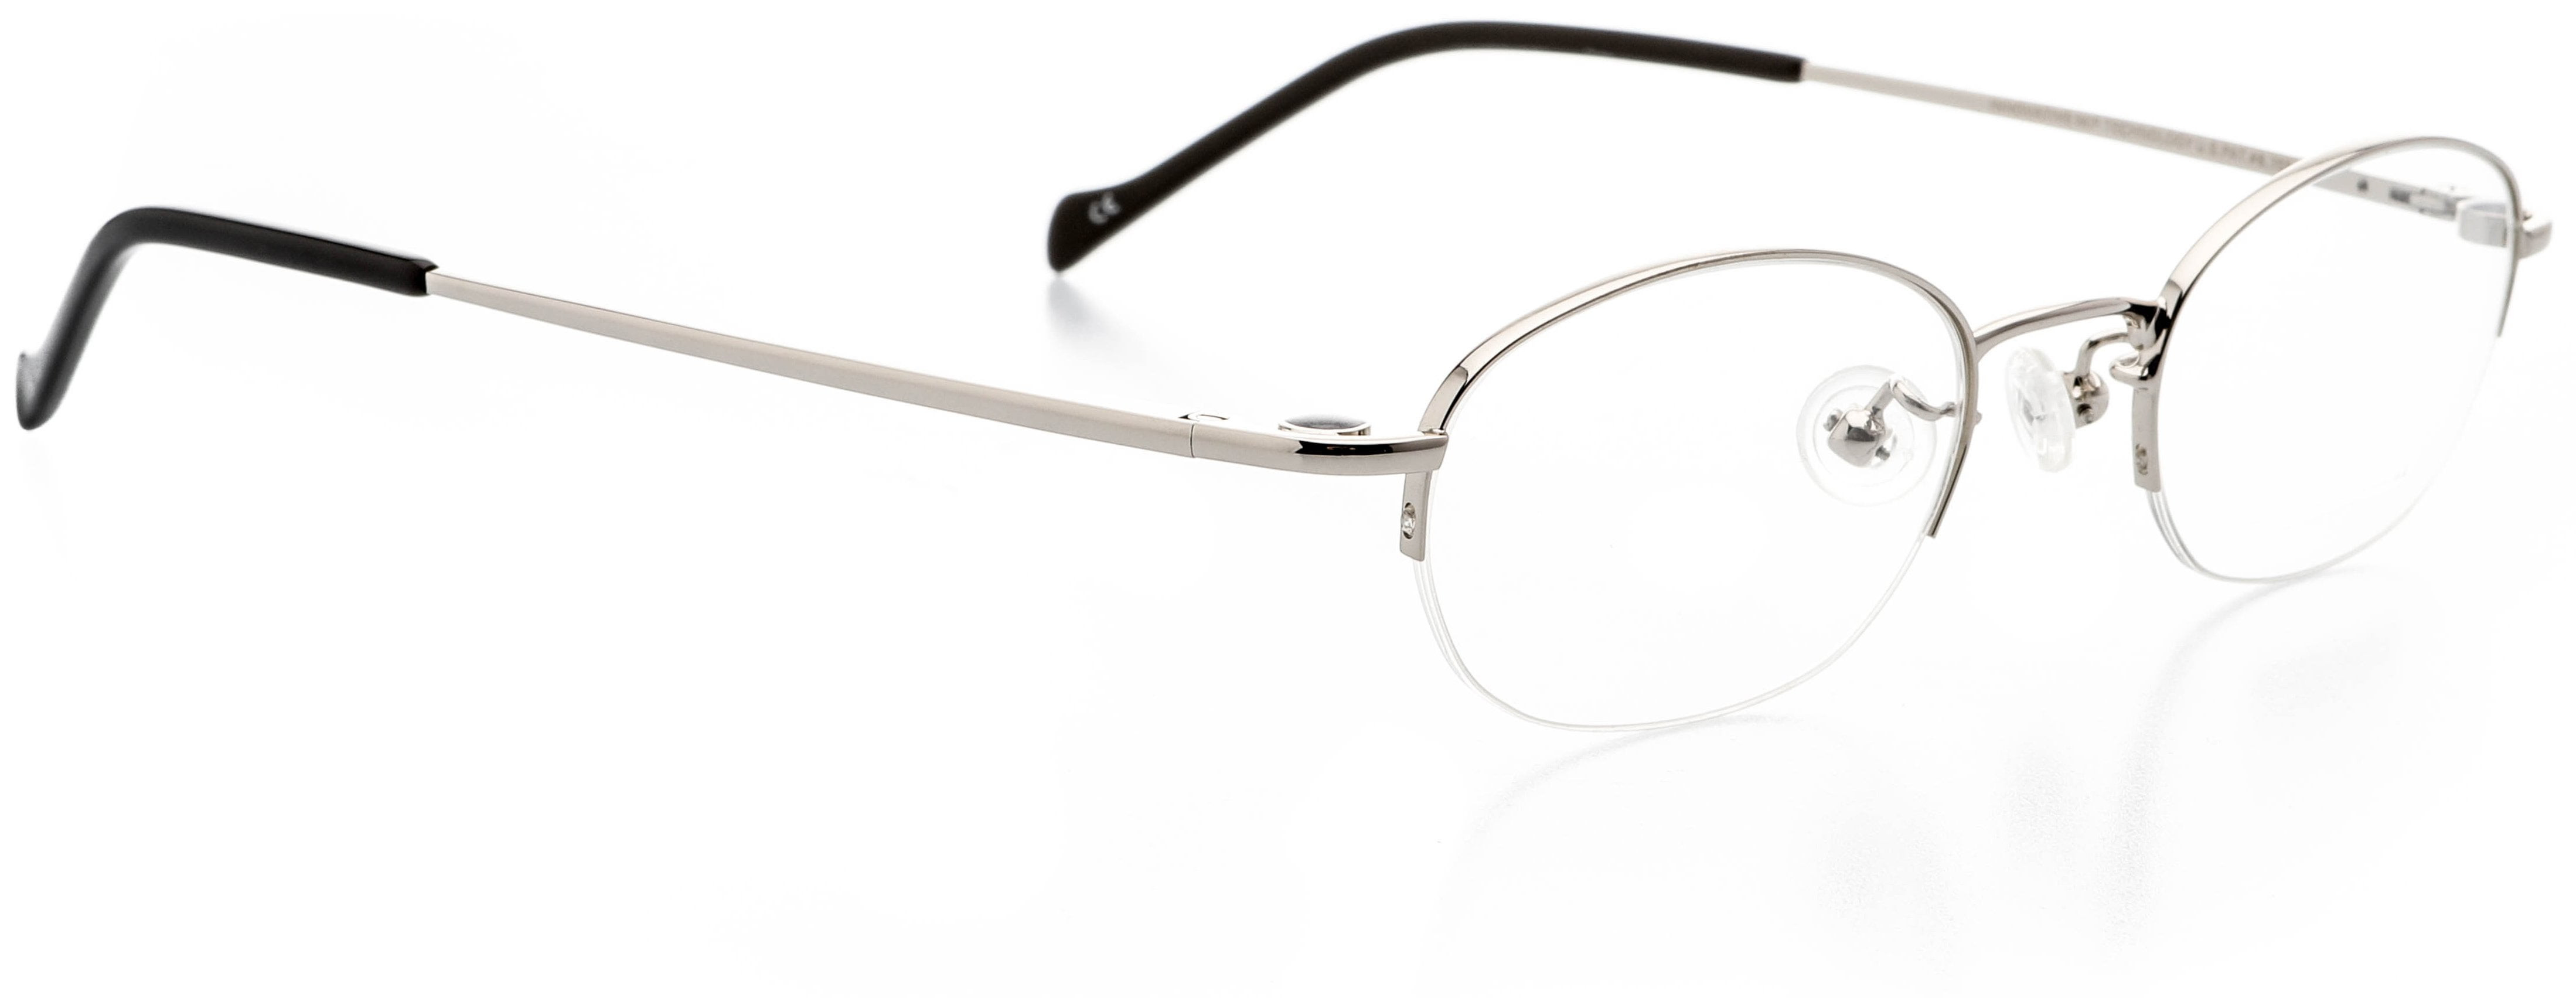 Optical Eyewear Oval Shape Metal Half Rim Frame Prescription Eyeglasses Rx Shiny Silver